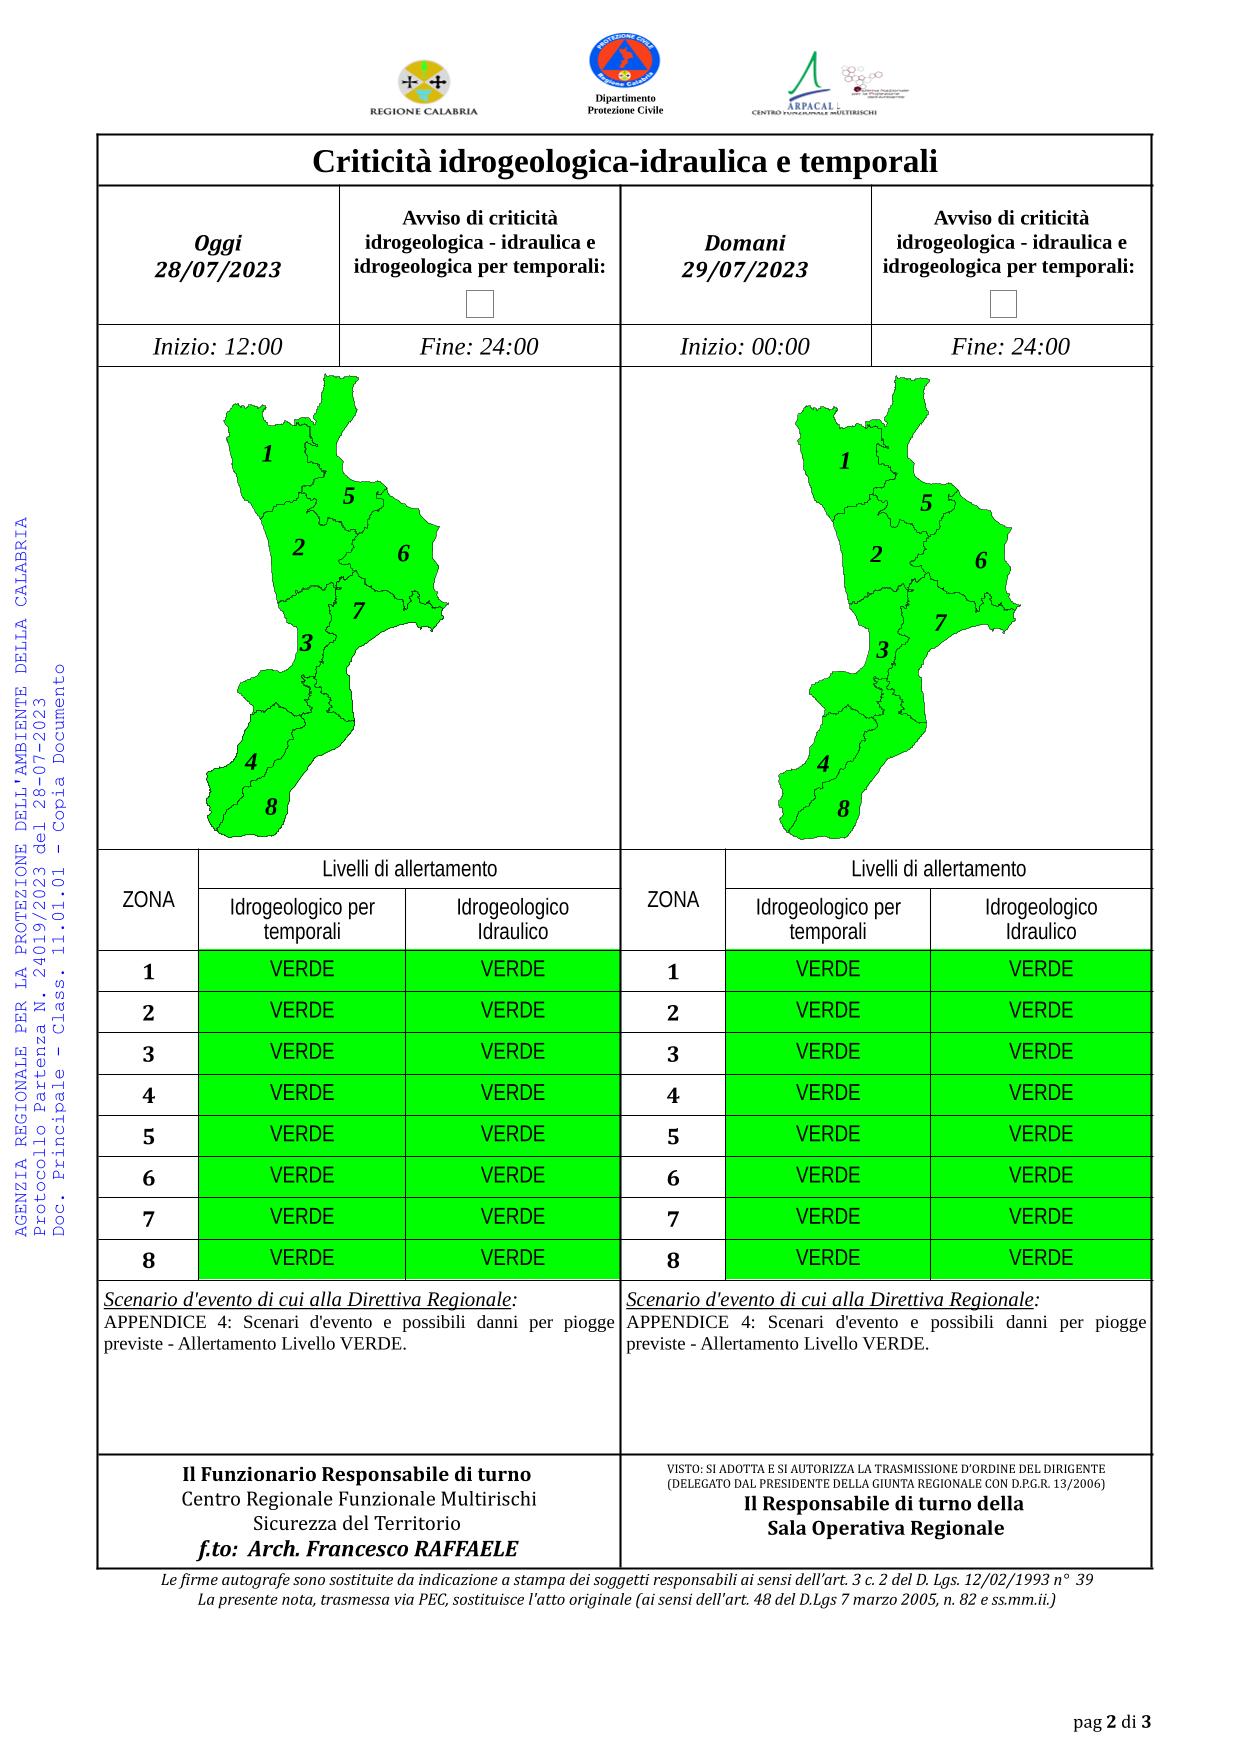 Criticità idrogeologica-idraulica e temporali in Calabria 28-07-2023